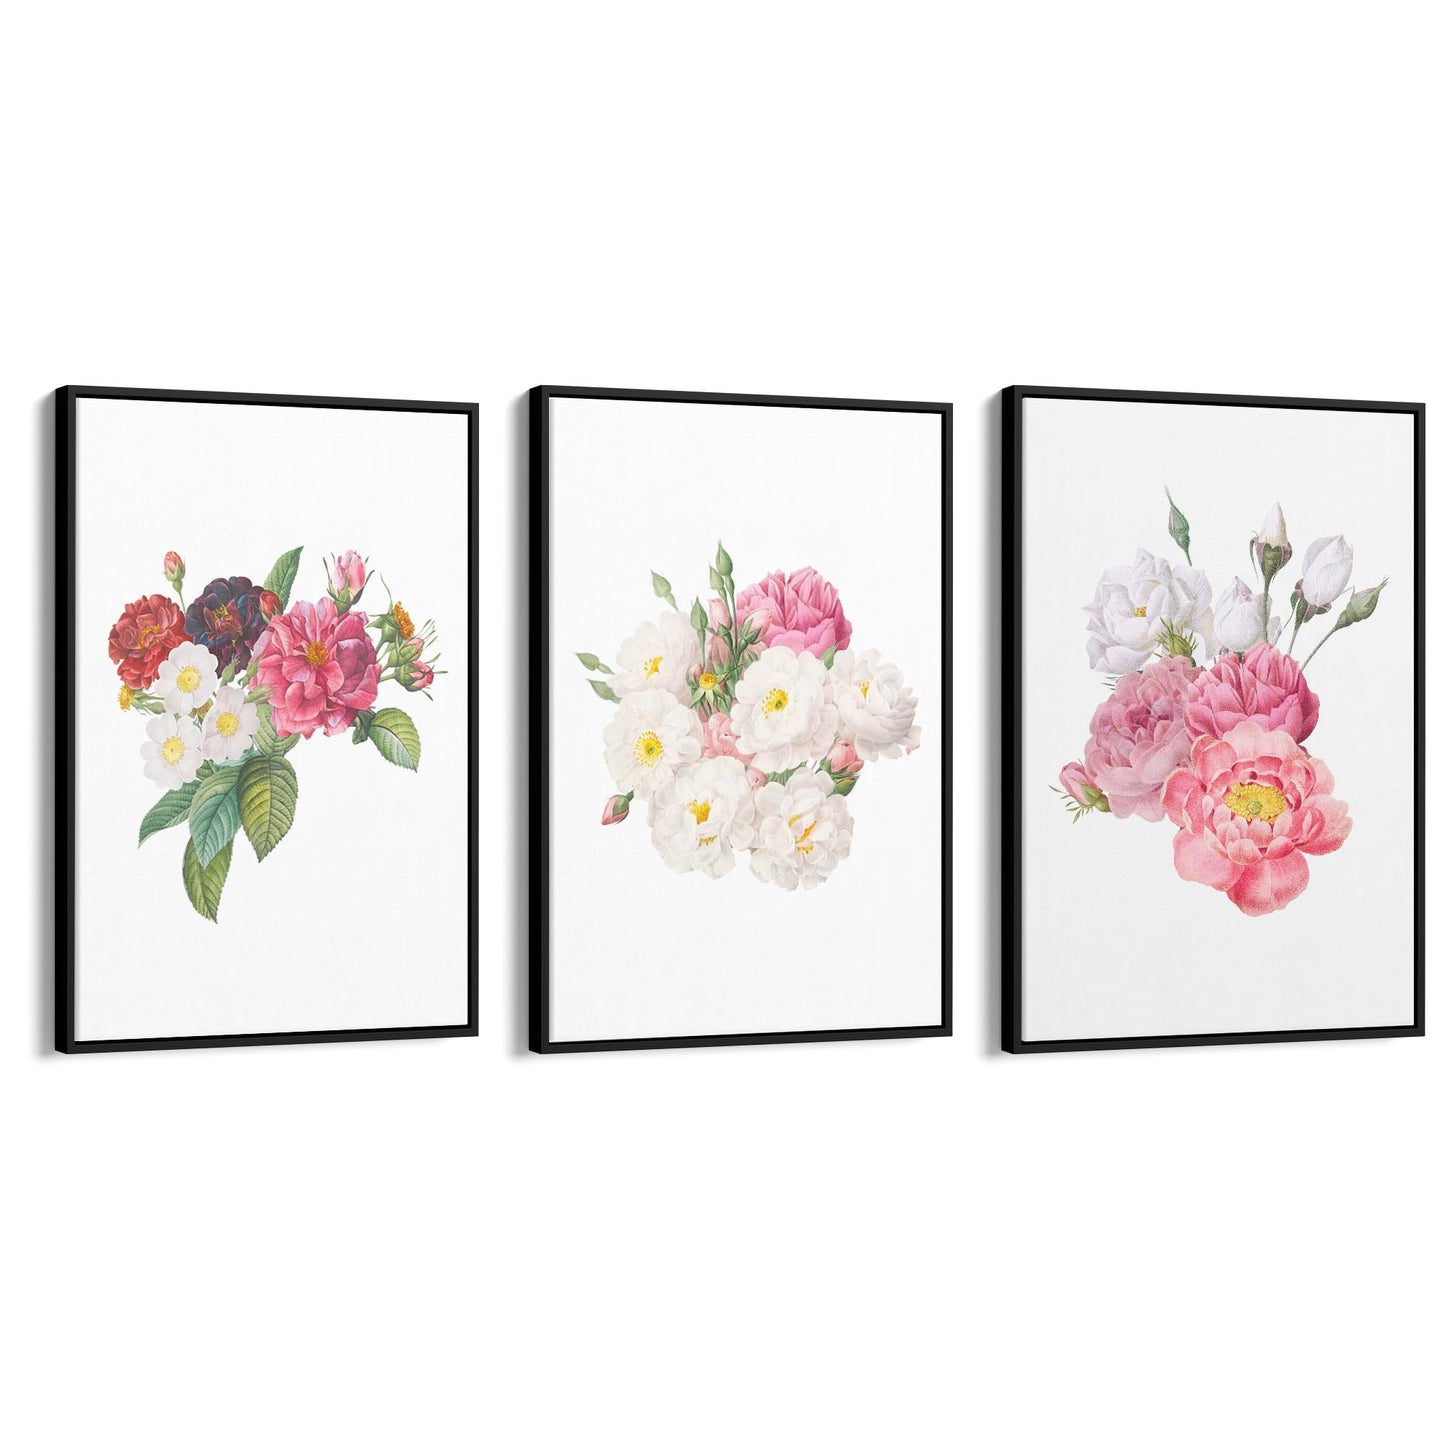 Set of Pink Floral Vintage Botanical Wall Art #1 - The Affordable Art Company